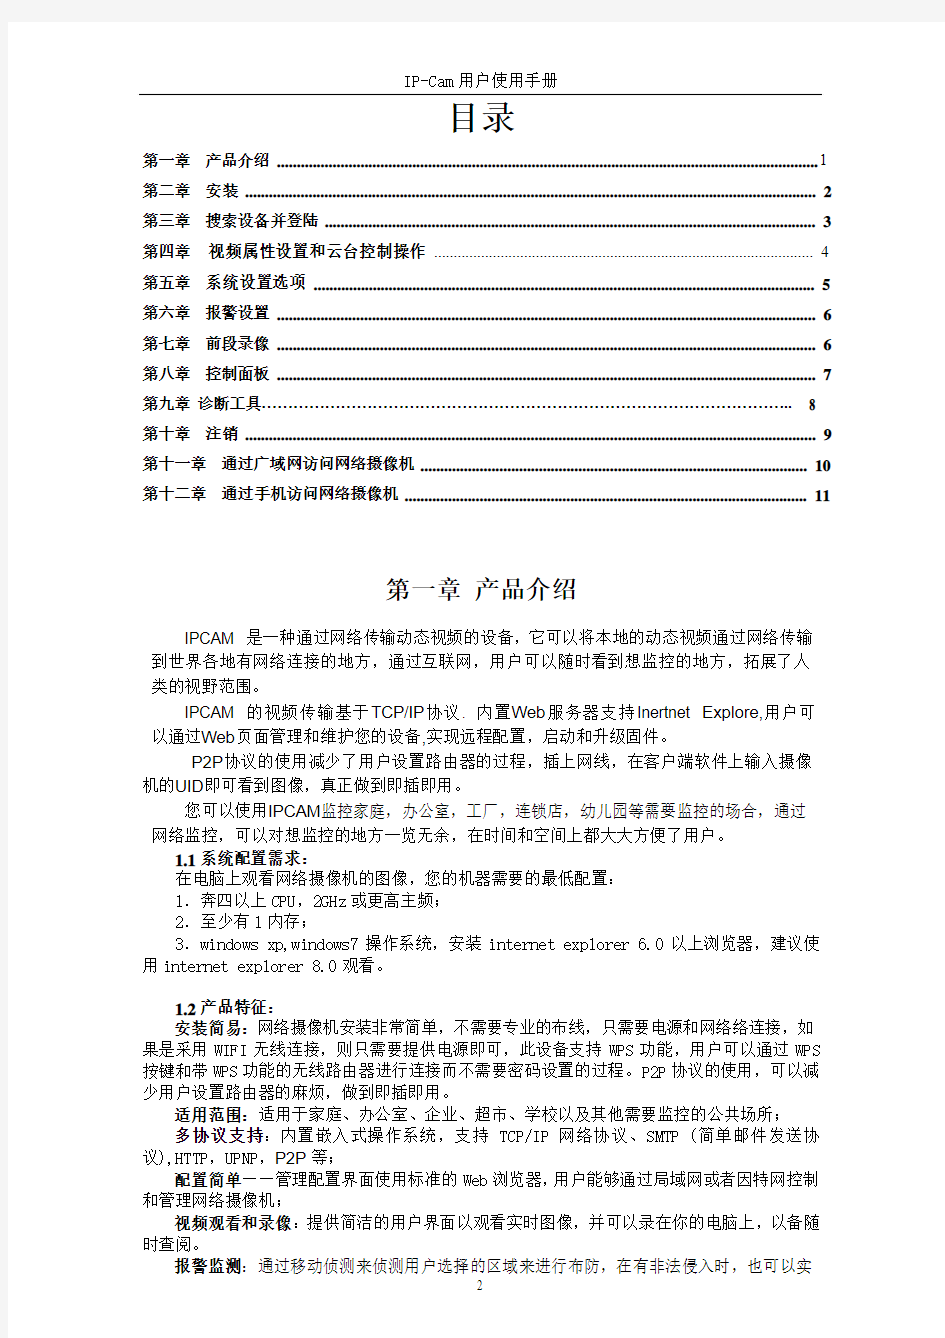 H.264详细使用说明书中文版_